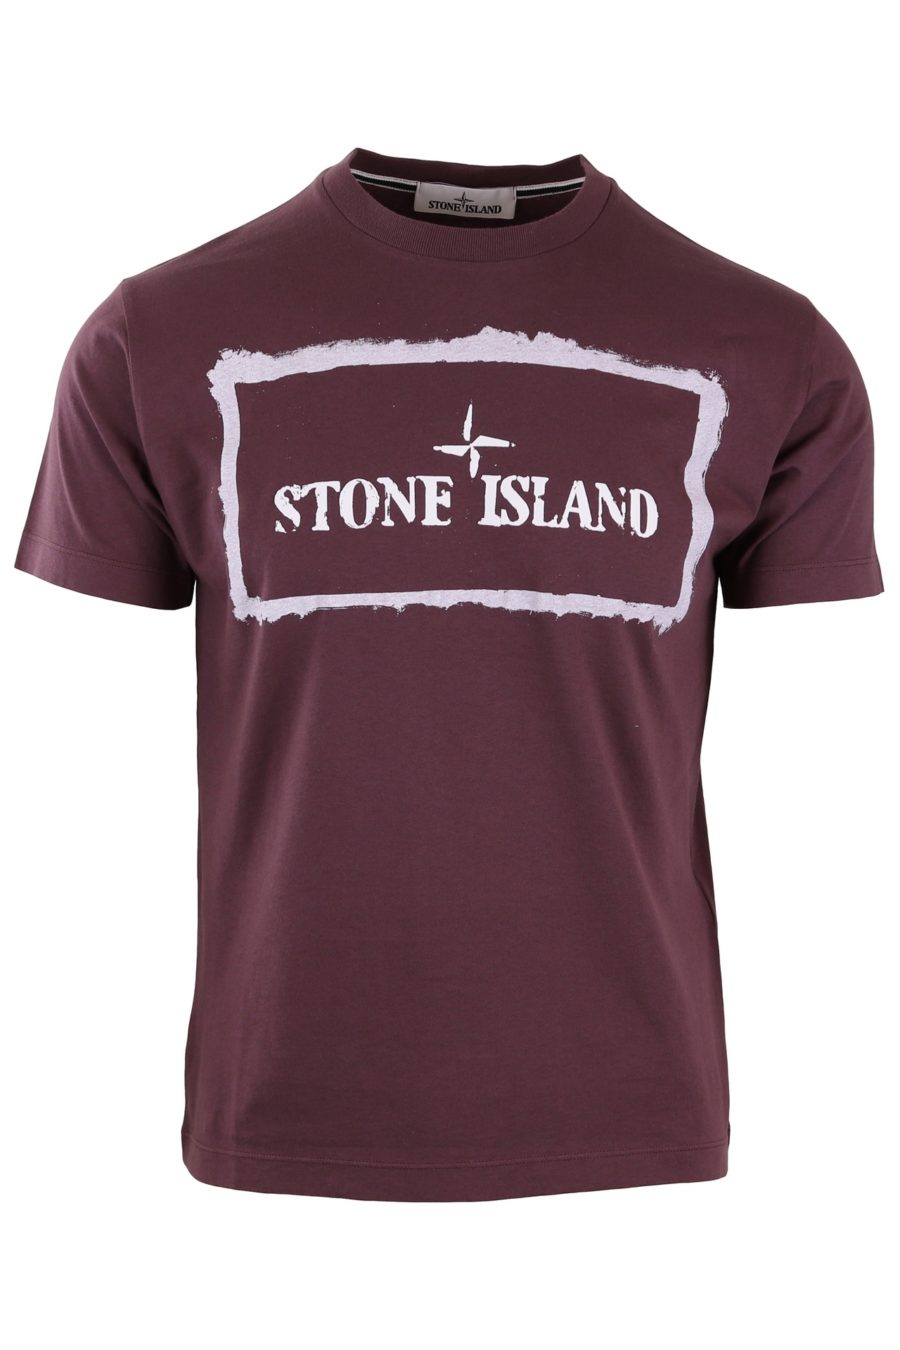 T-shirt Stone Island burgundy logo weiß - fb34f081377006574e4db05afbdb1d5403d65410